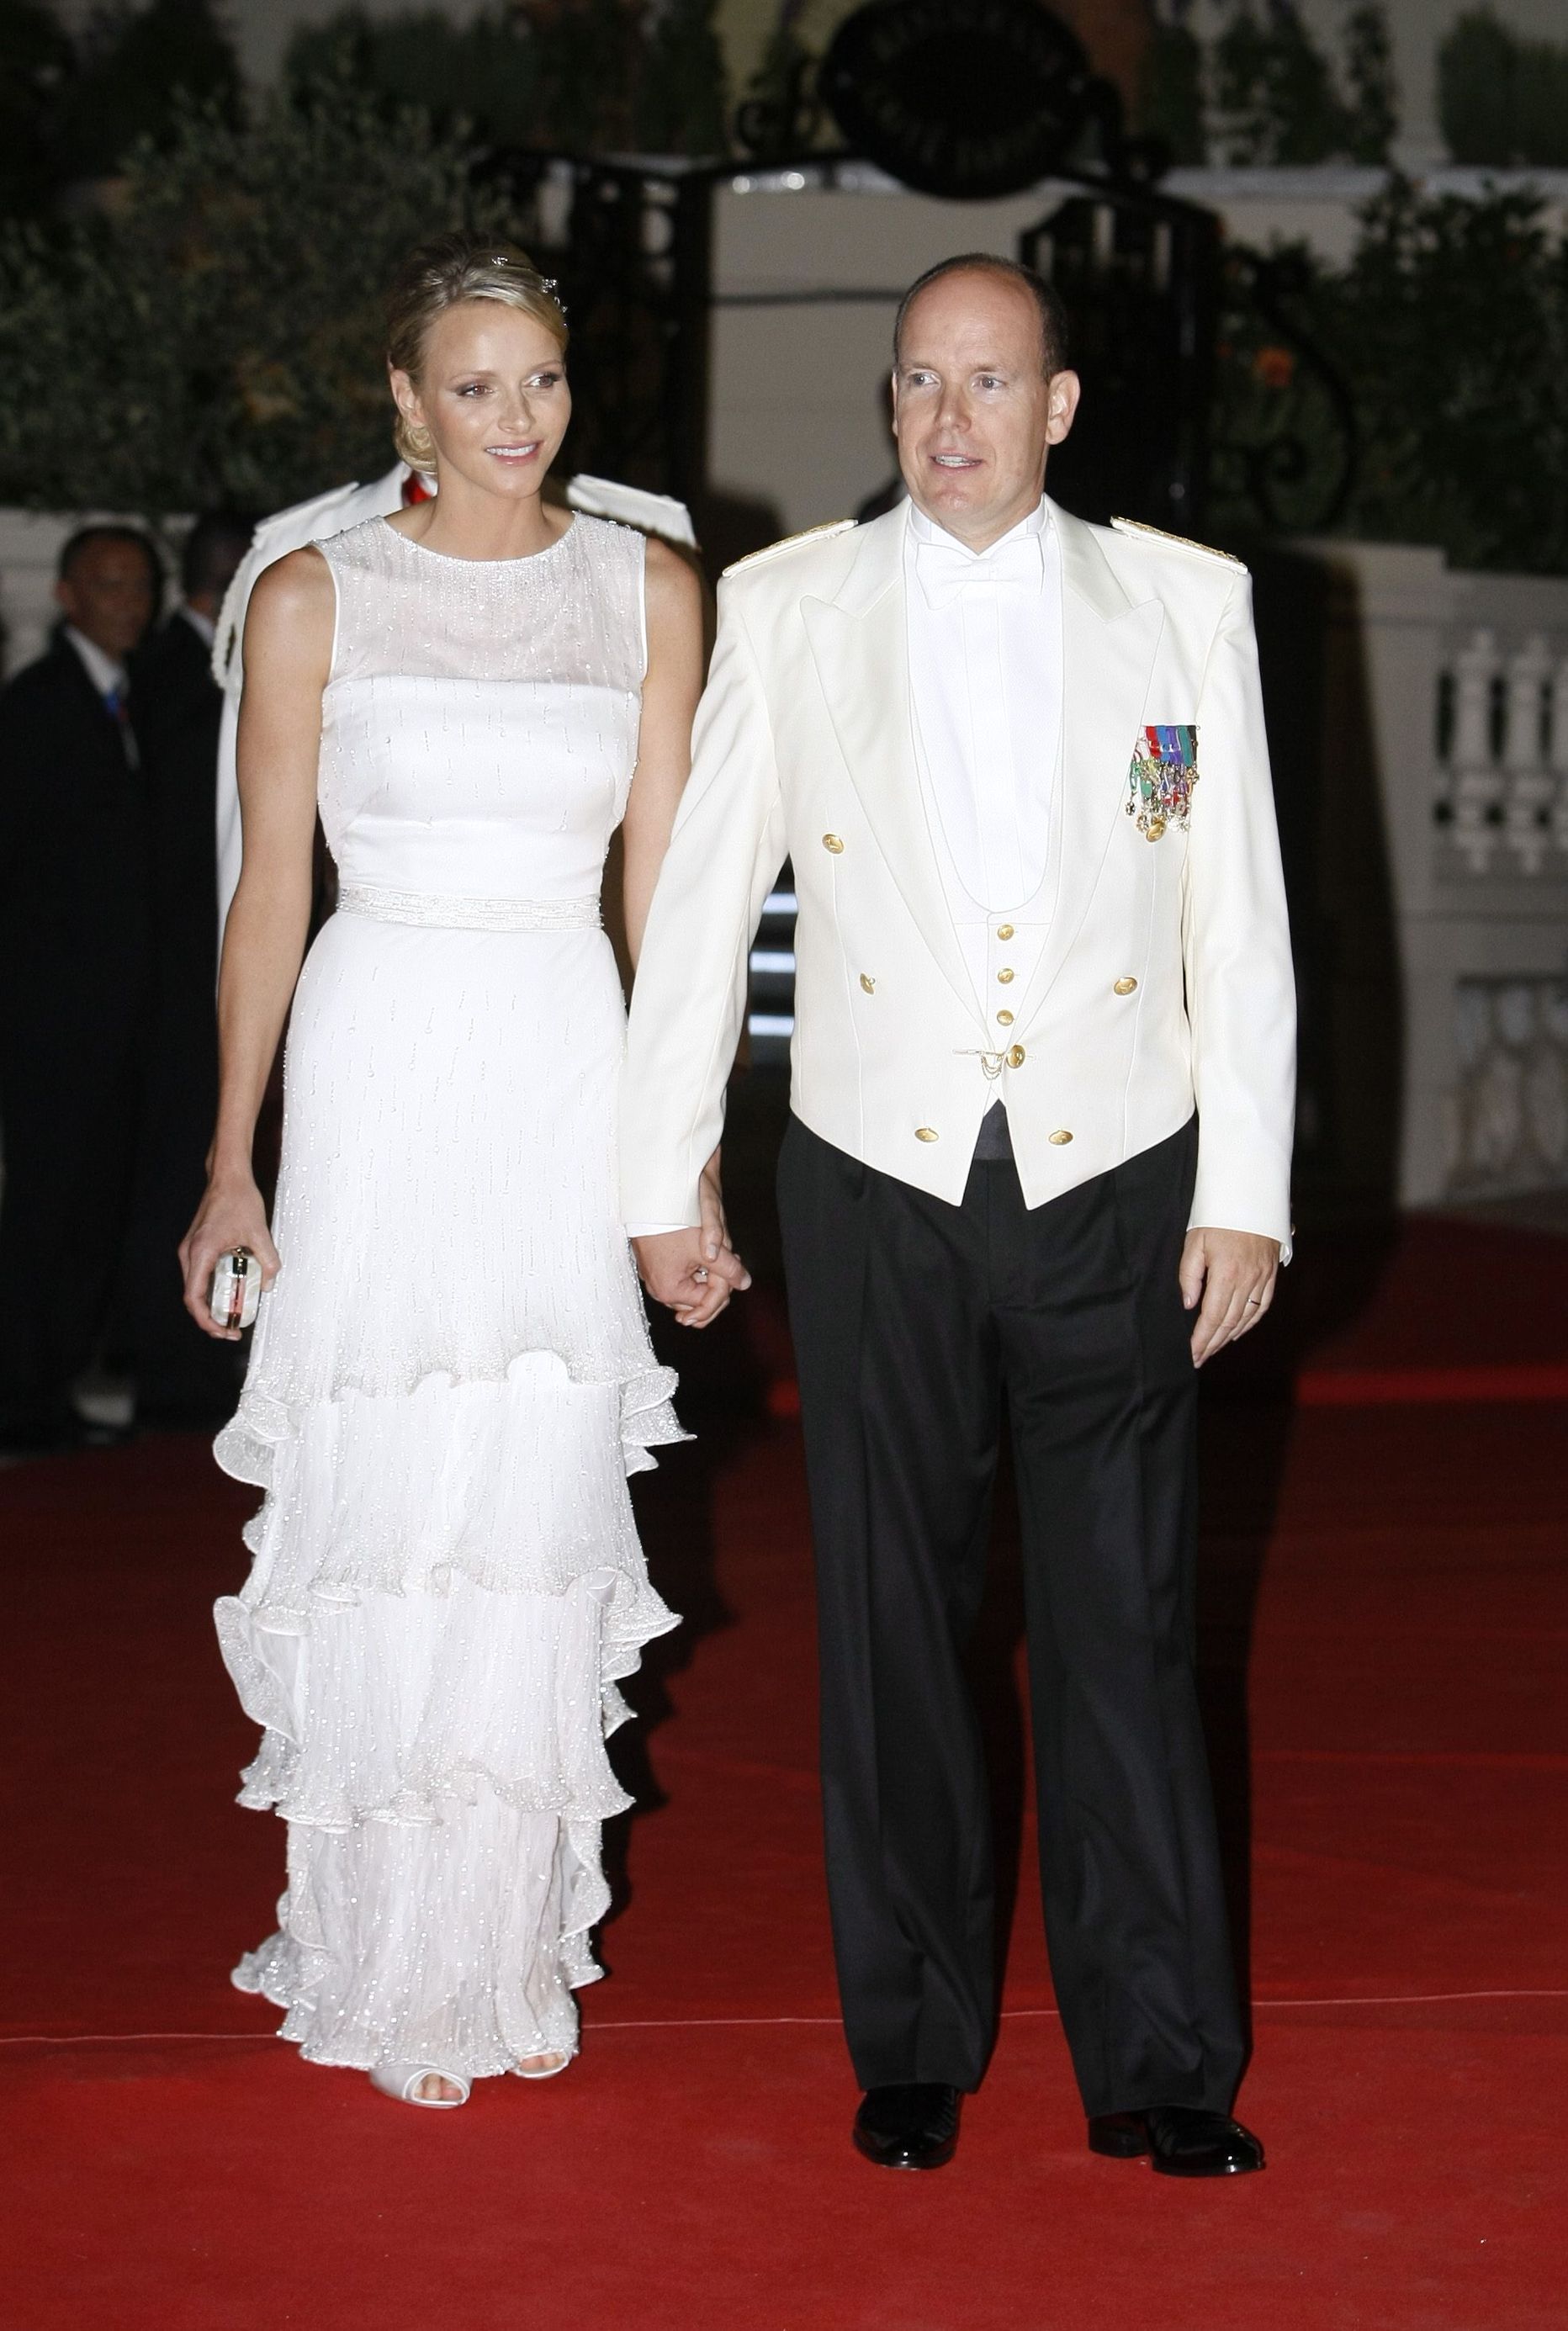 Monaco vürst Albert II  ja vürstinna Charlene